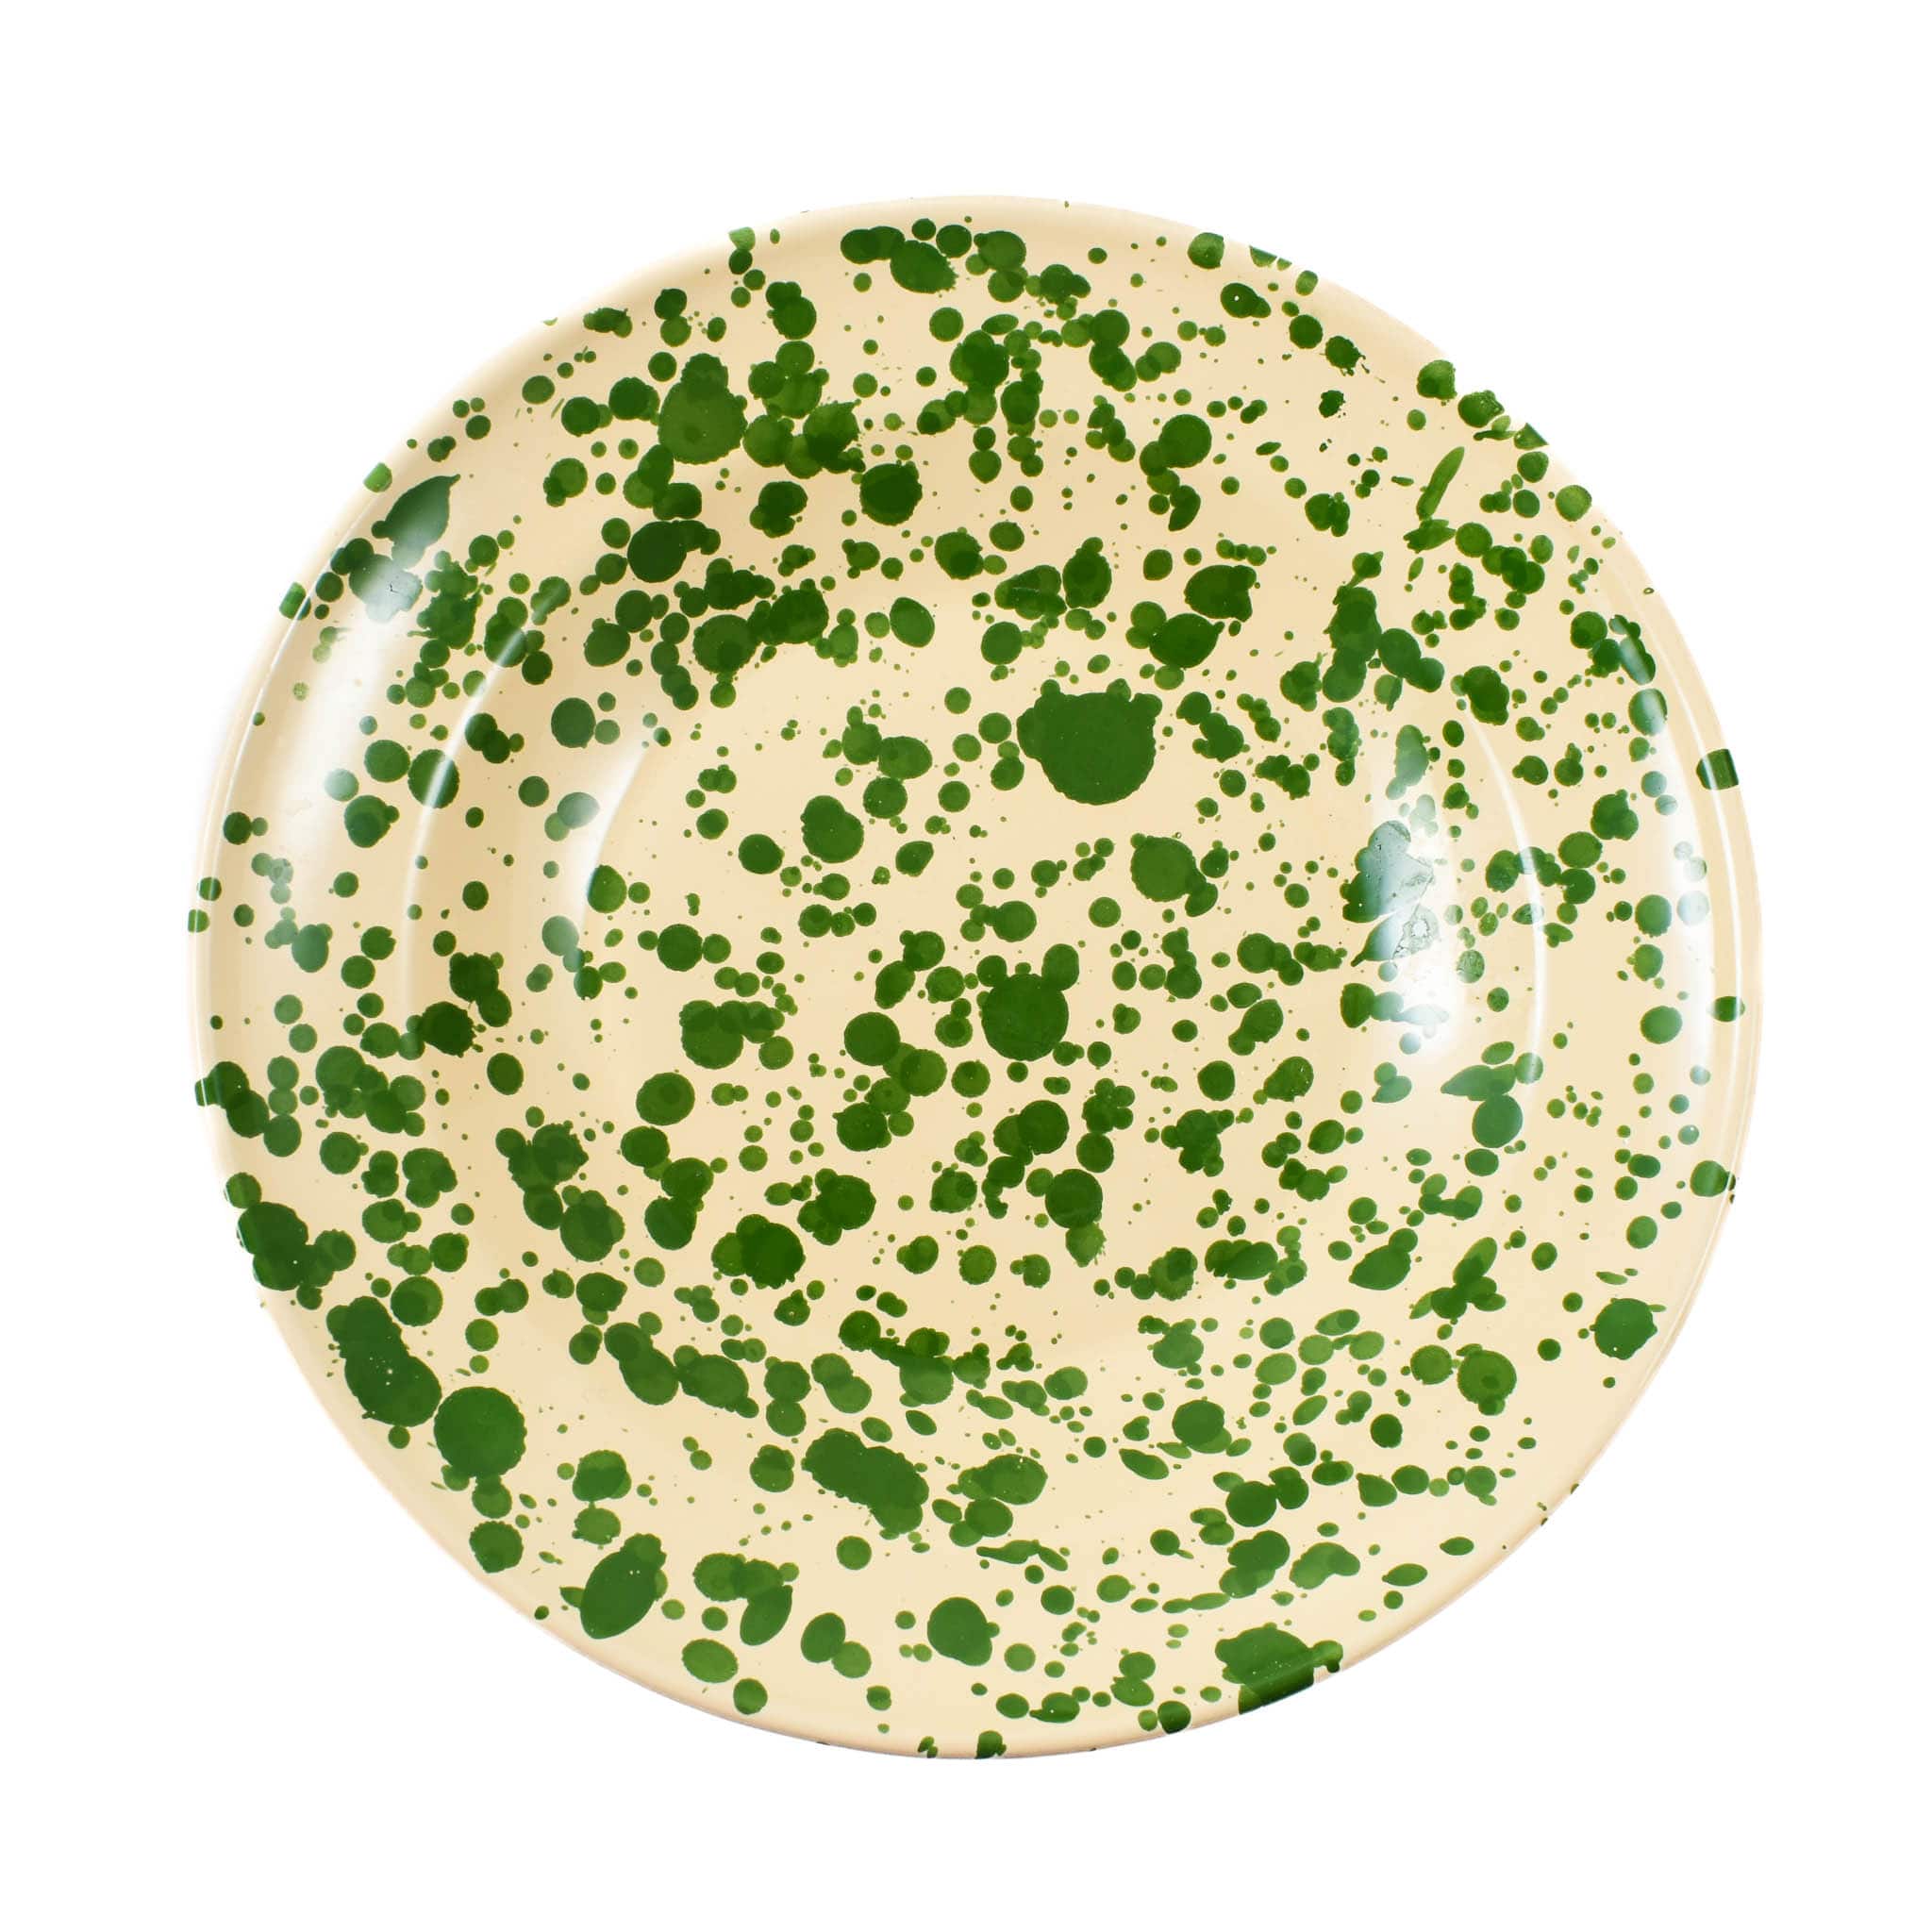 Puglia Green Splatter Pasta Bowl, 29cm